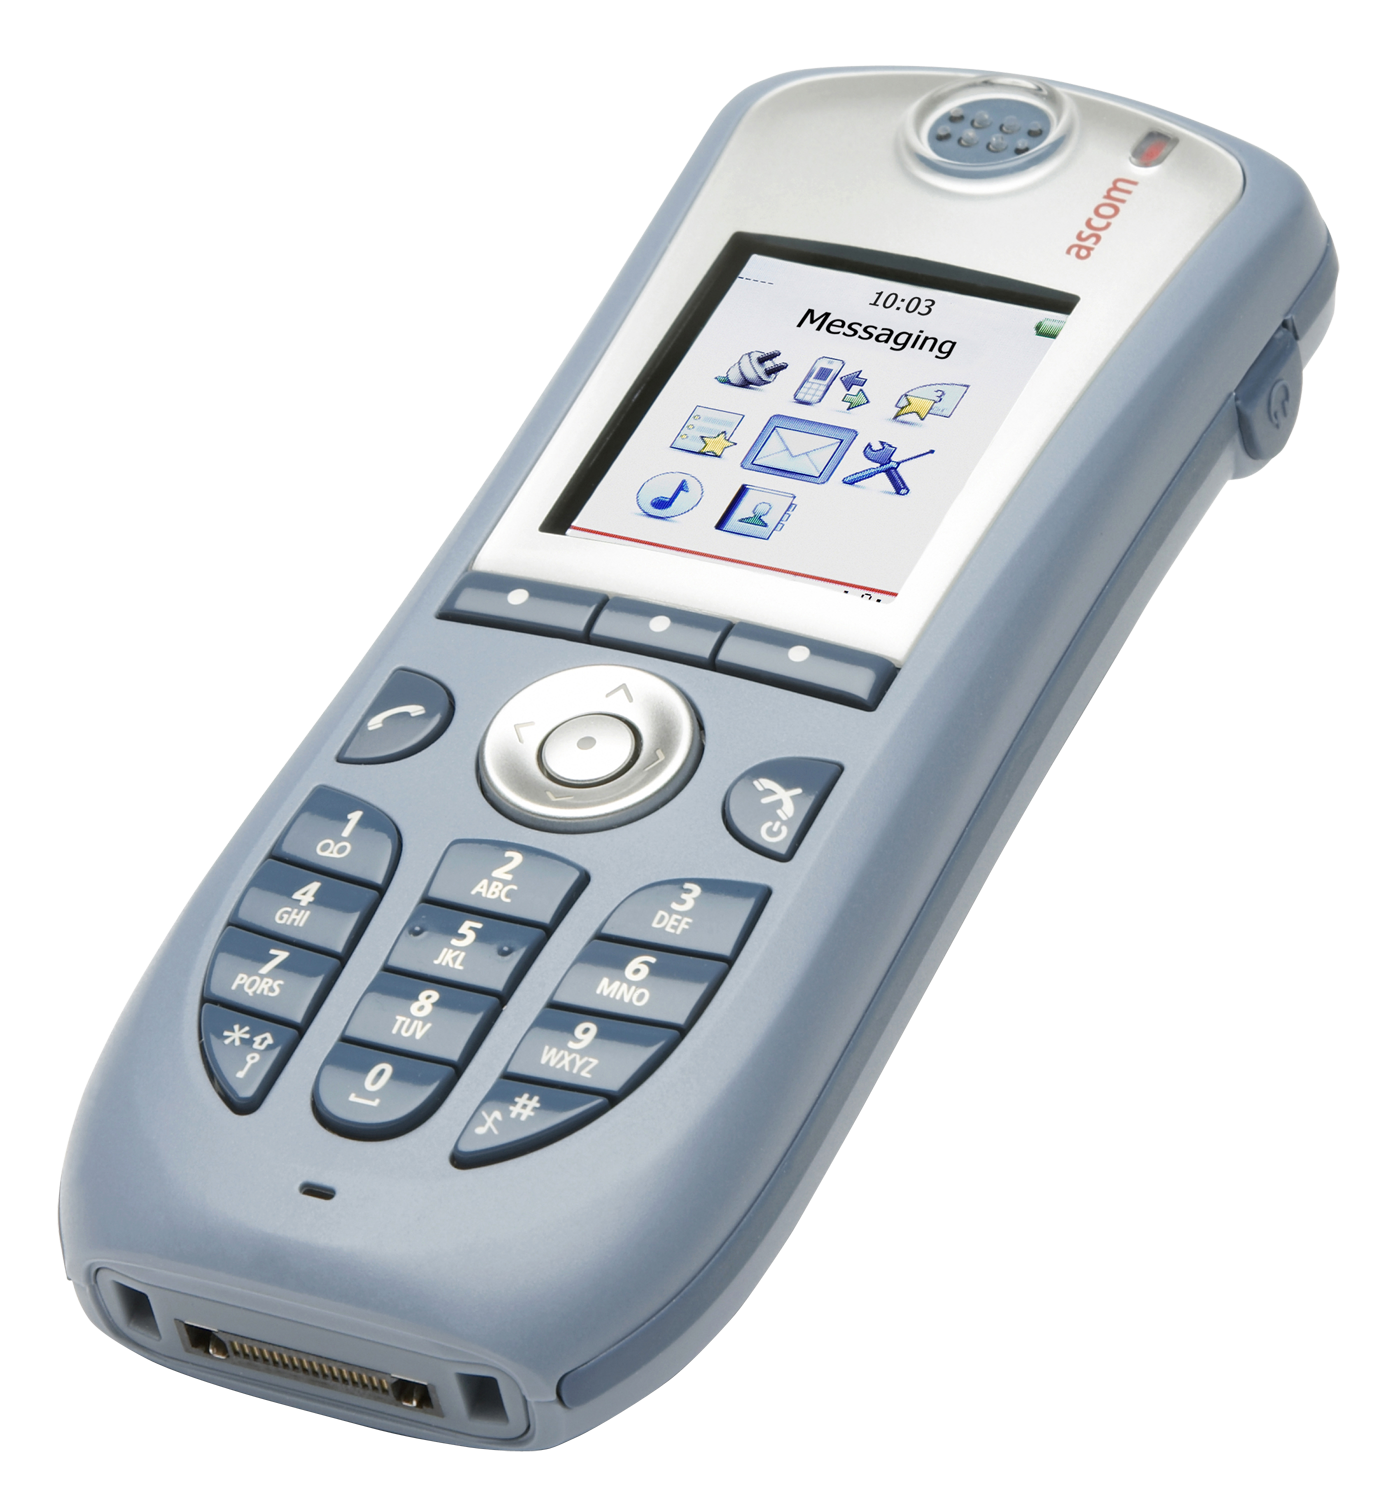 Ascom i62 Basic Voice over WiFi handset refurbished